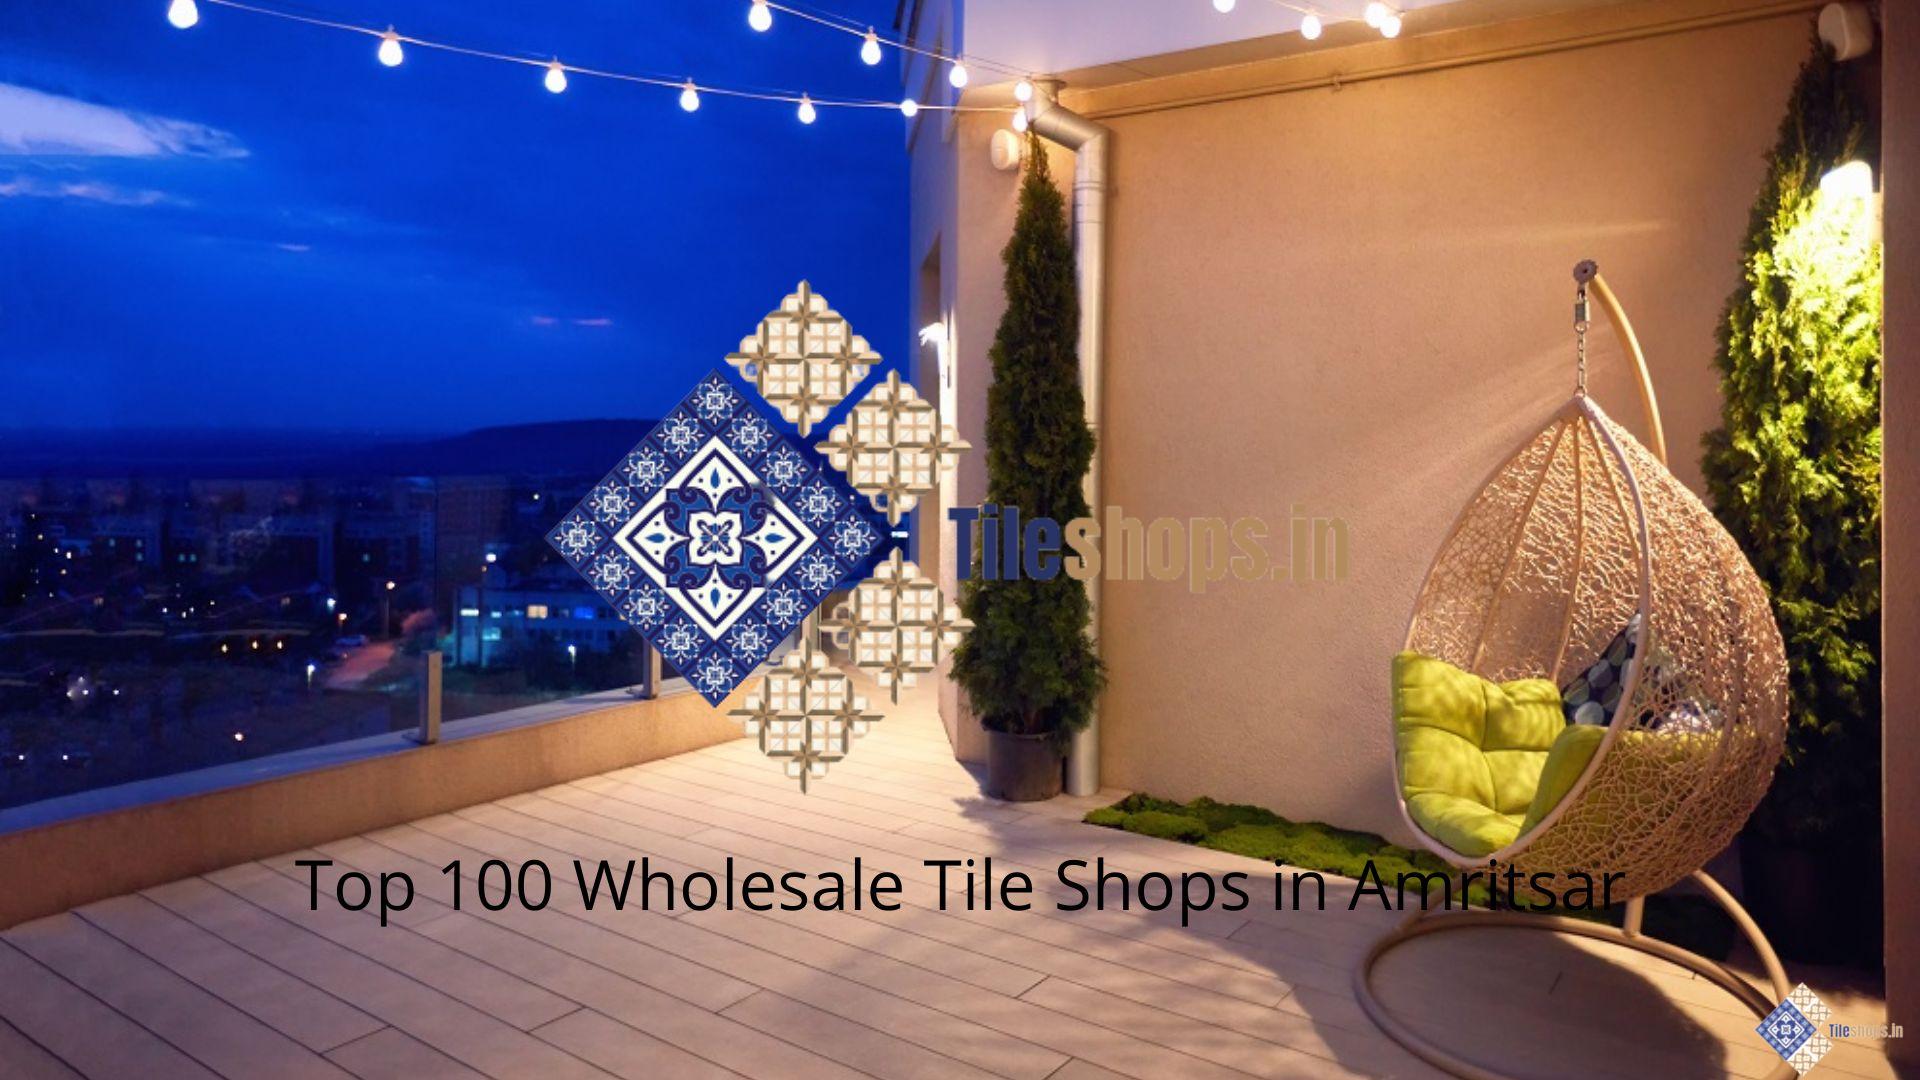 Top 100 Wholesale Tile Shops in Amritsar